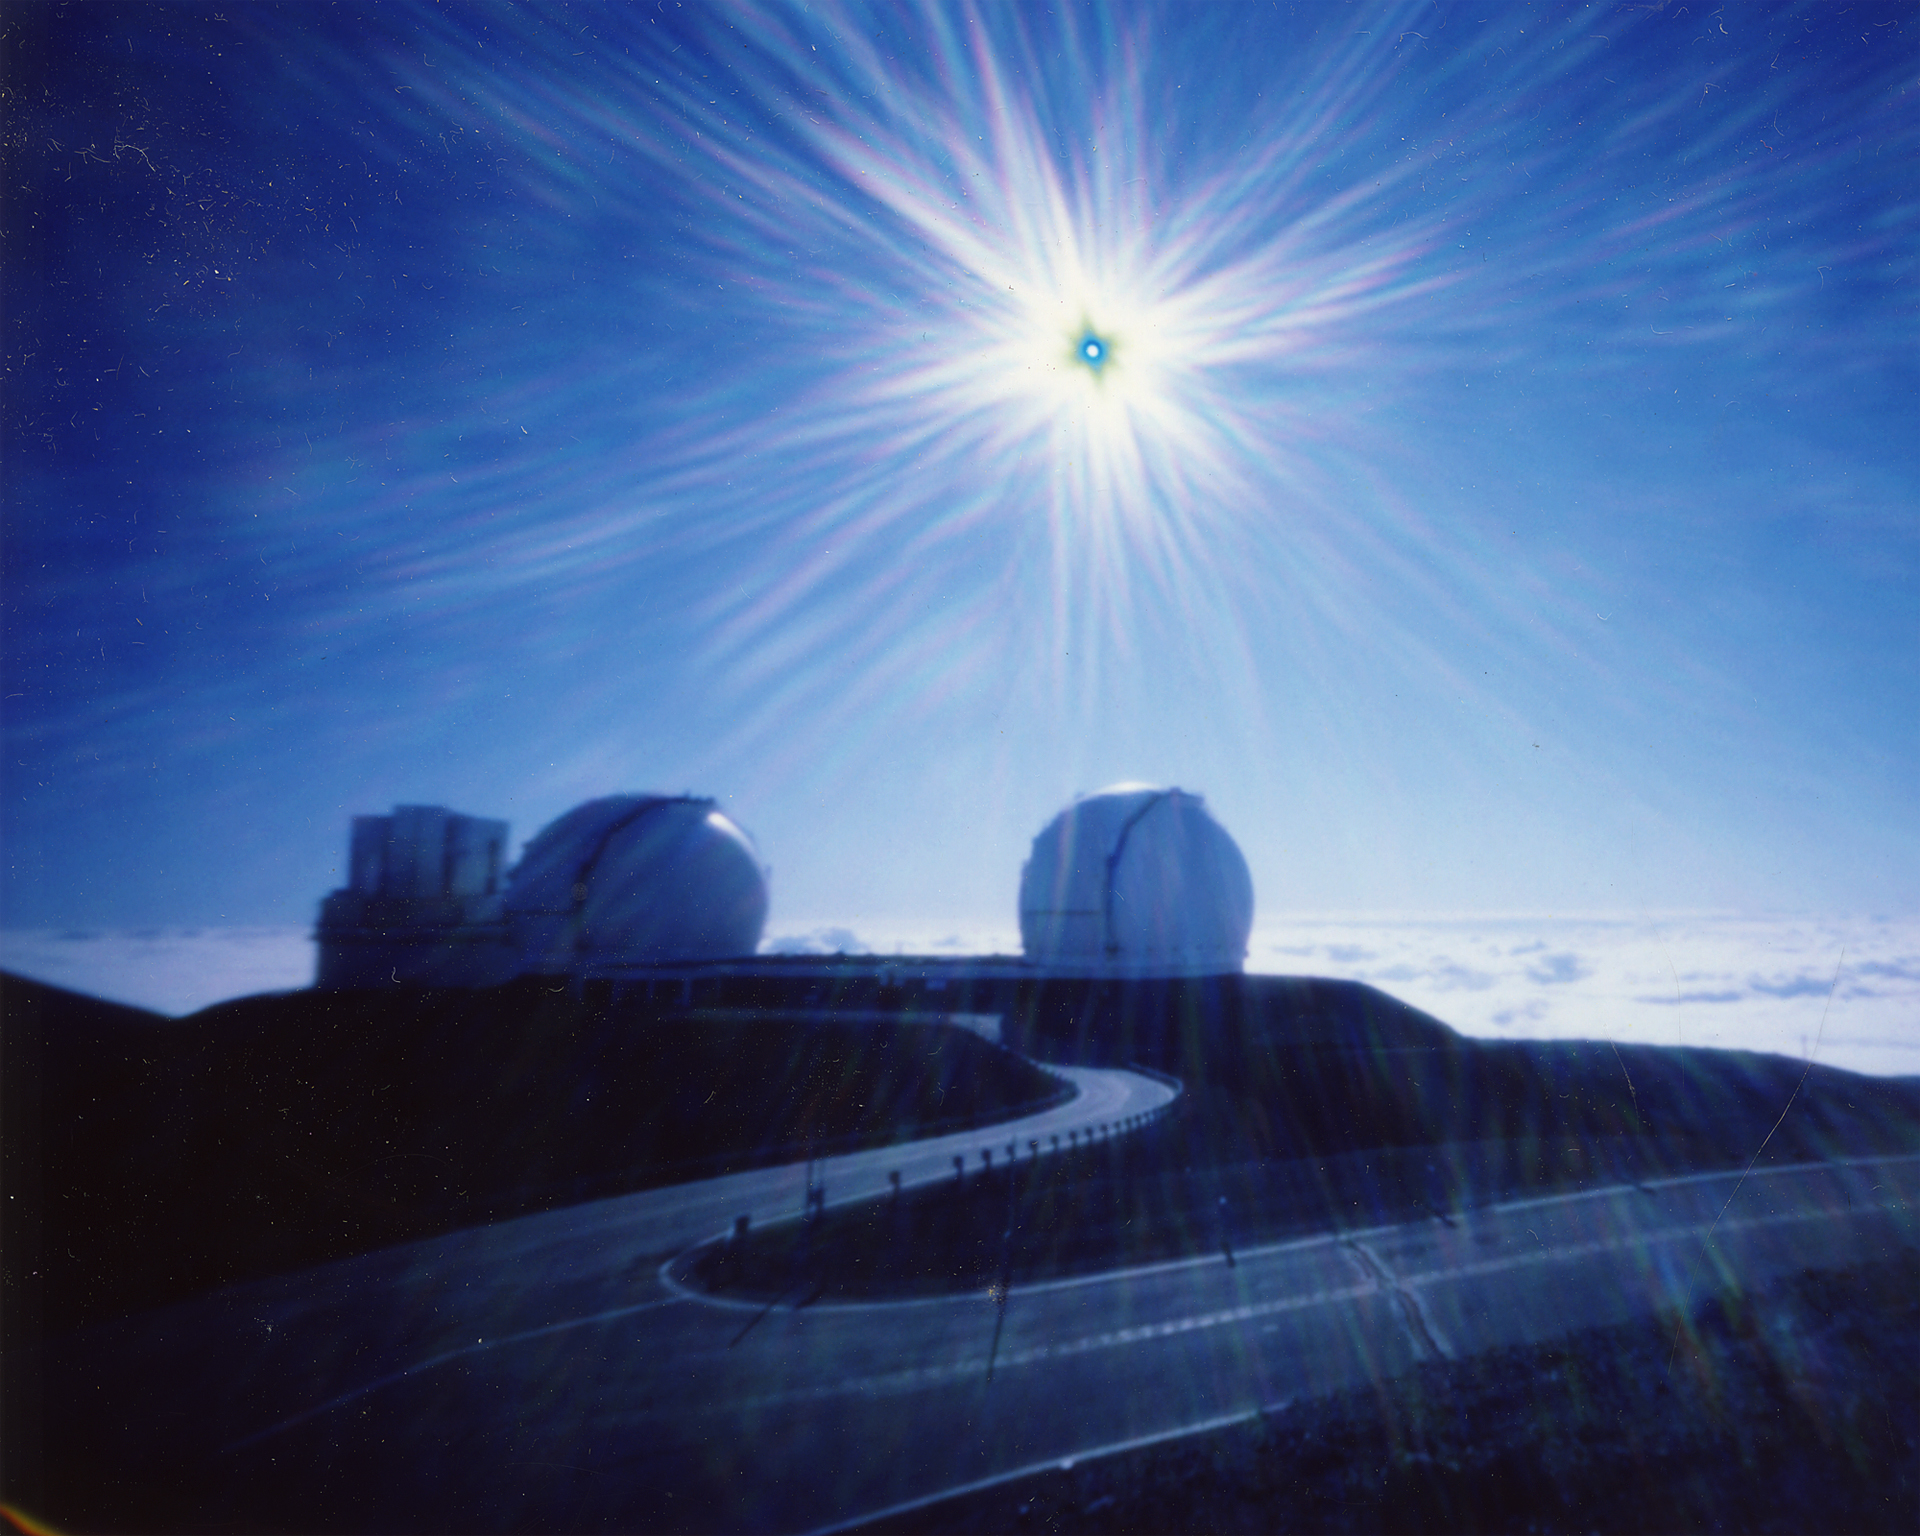  "Keck Telescopes at 970MPH" Fujifilm FP-100C Instant Picture, 3.25"x4.25", 2017. 